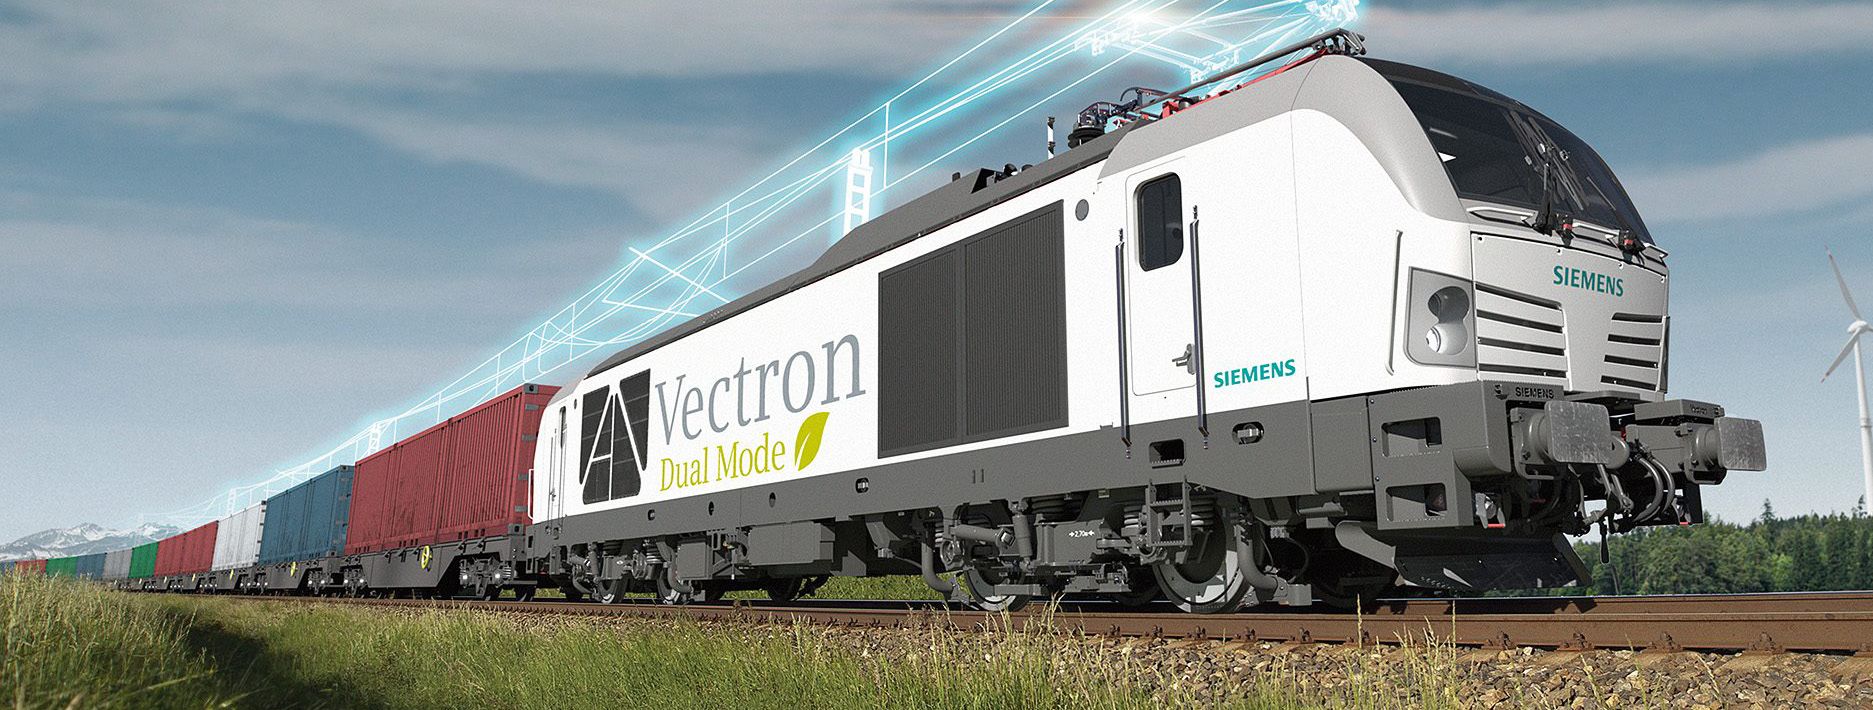 Locomotora-Vectron-dual-Mode-Siemens Mobility